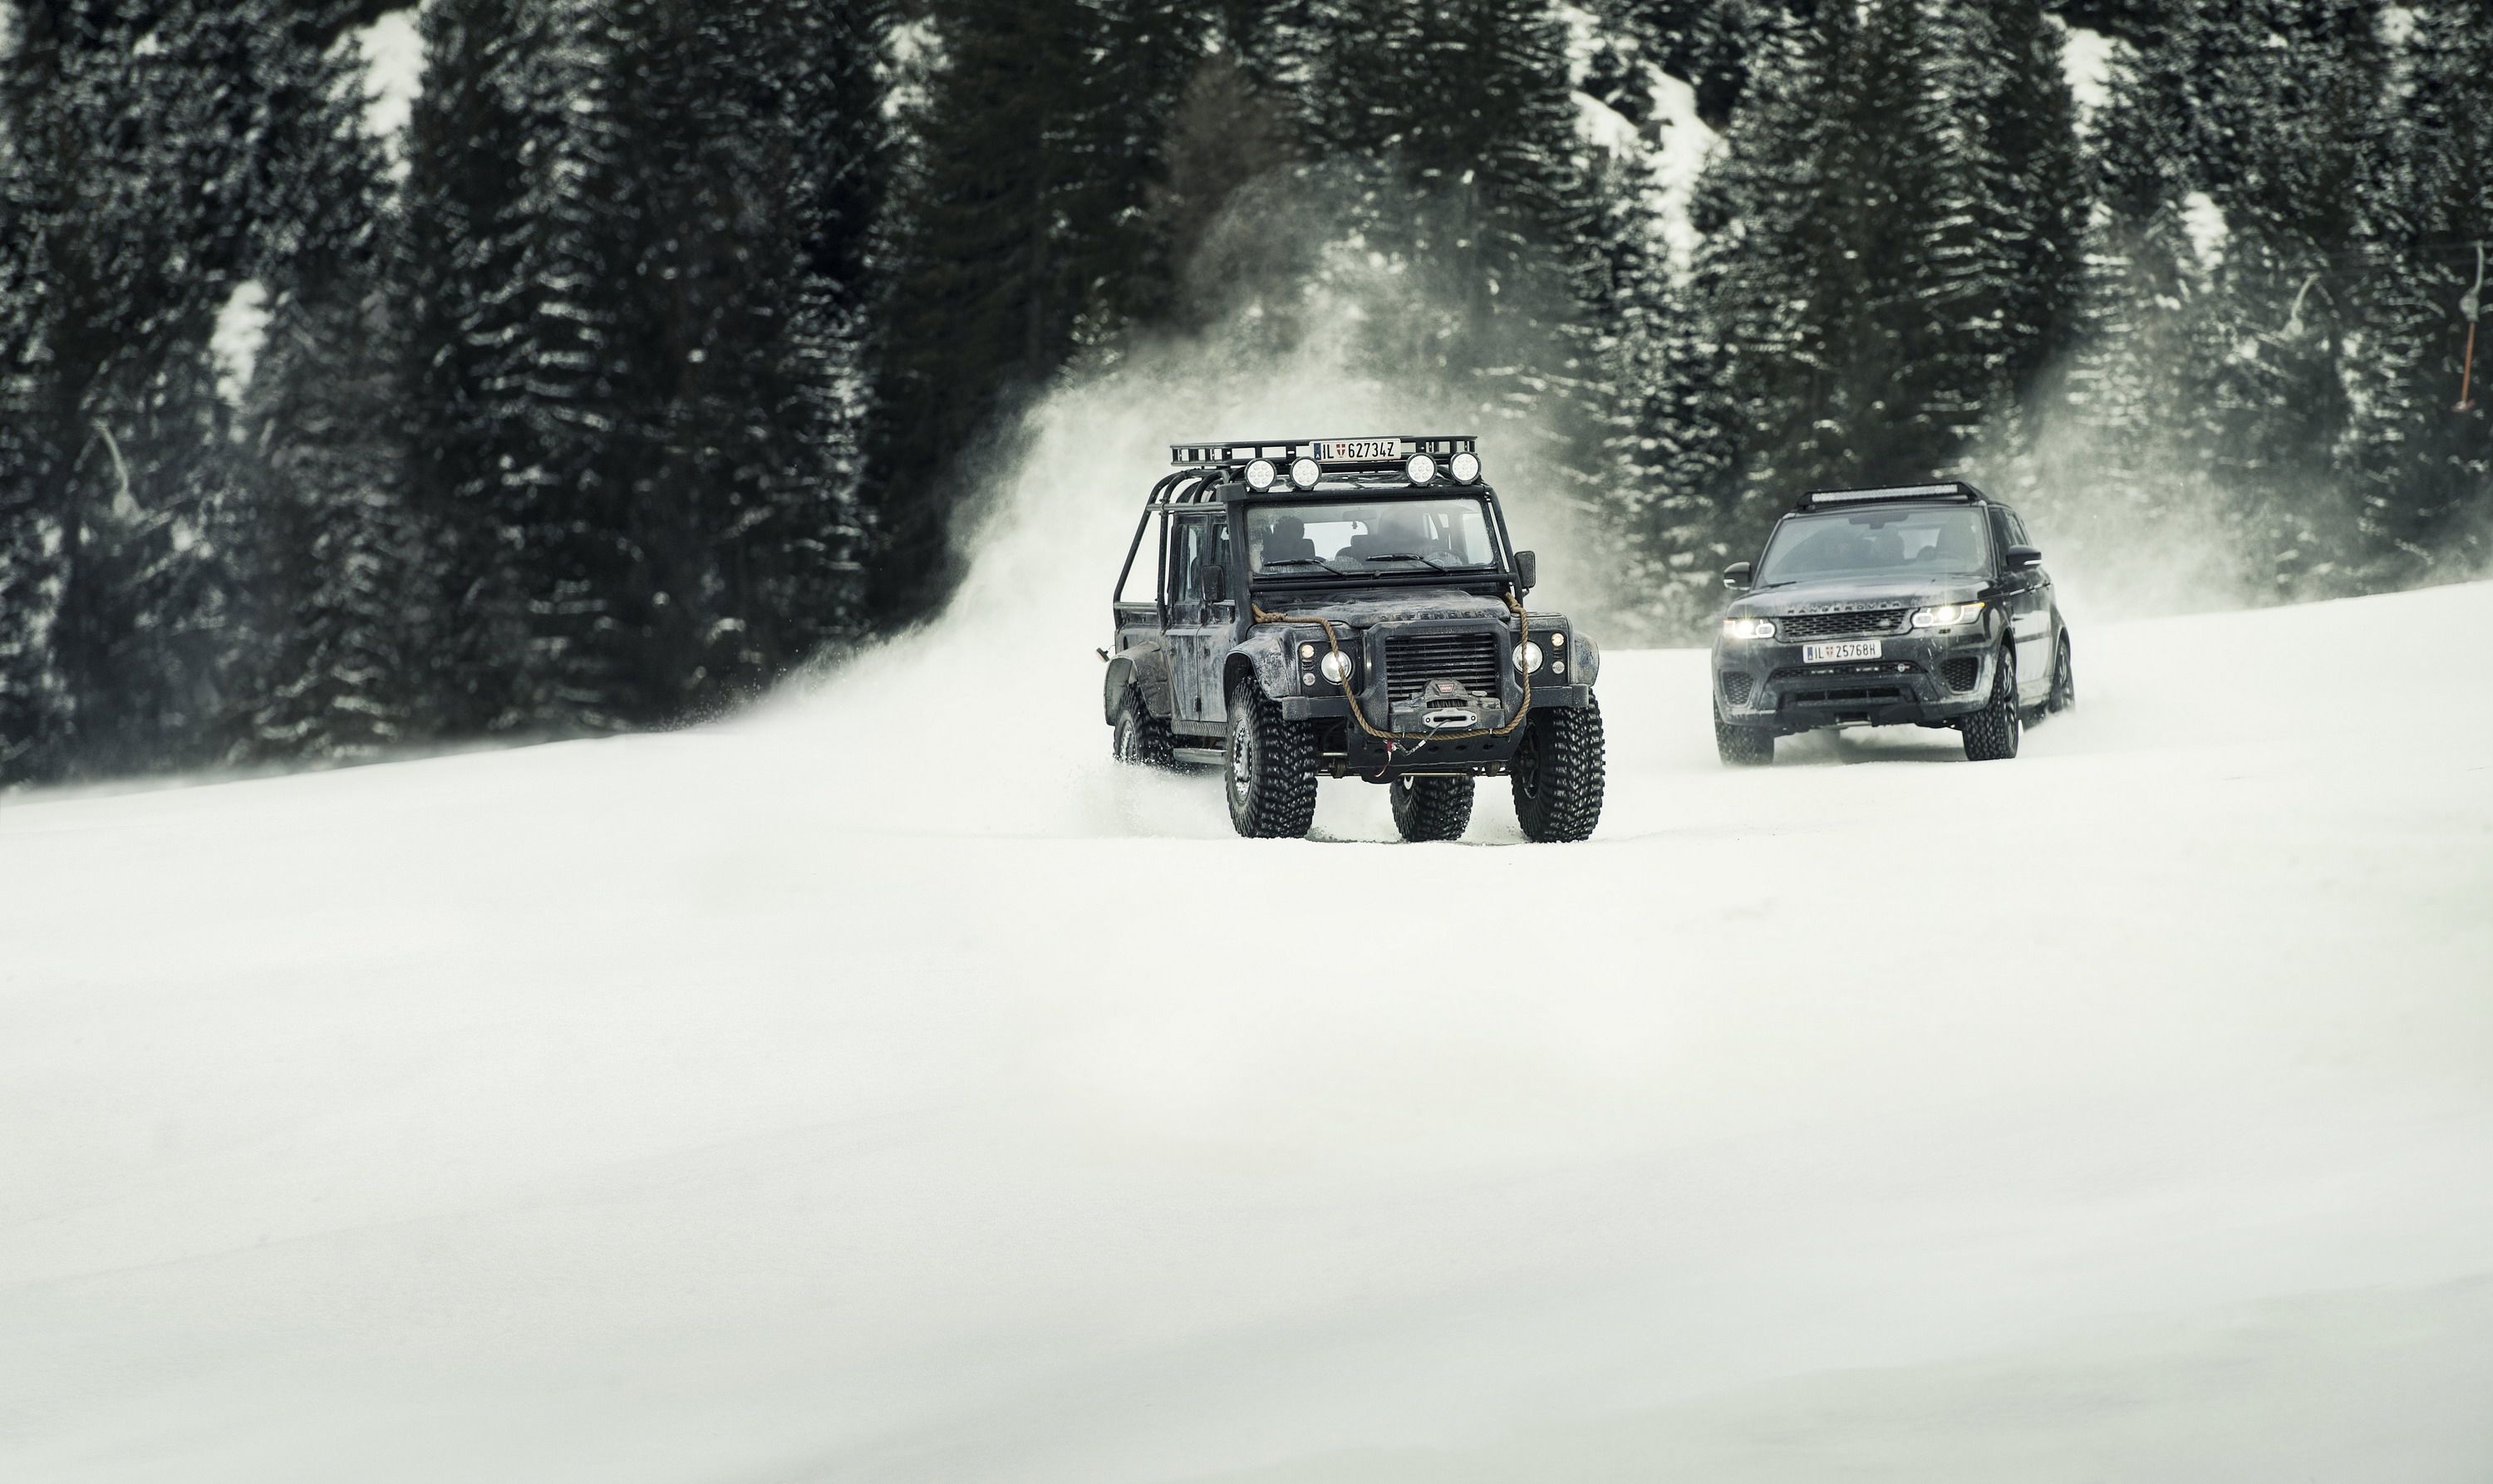 2015 Land Rover Defender Spectre Stunt Car